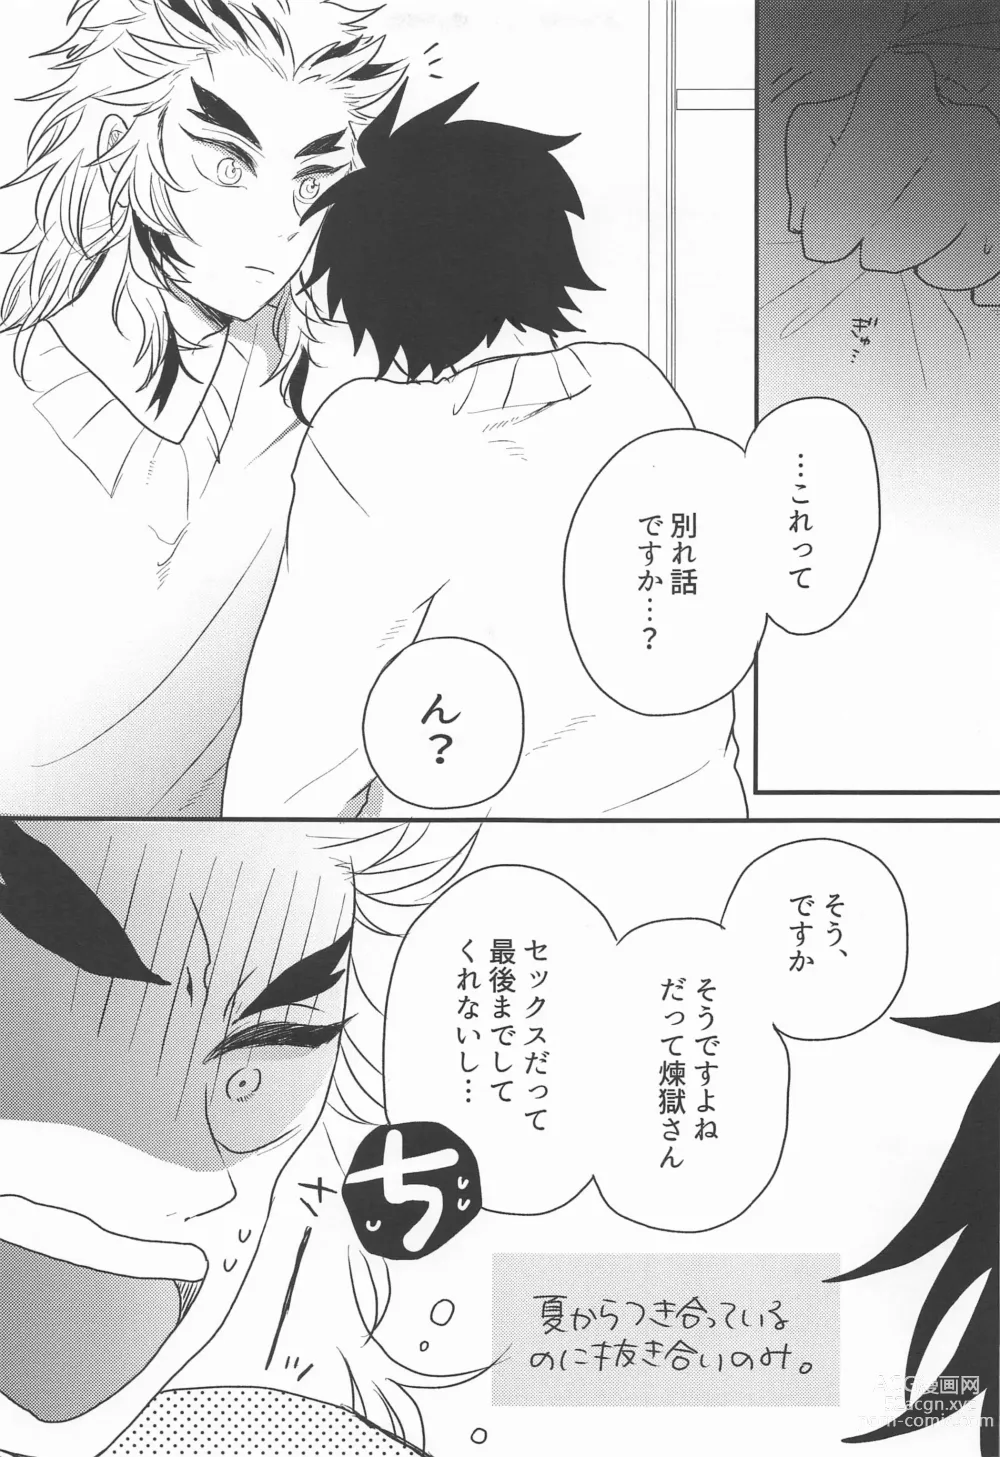 Page 10 of doujinshi Madogiwa no Rinjin To Fuyu no Hi